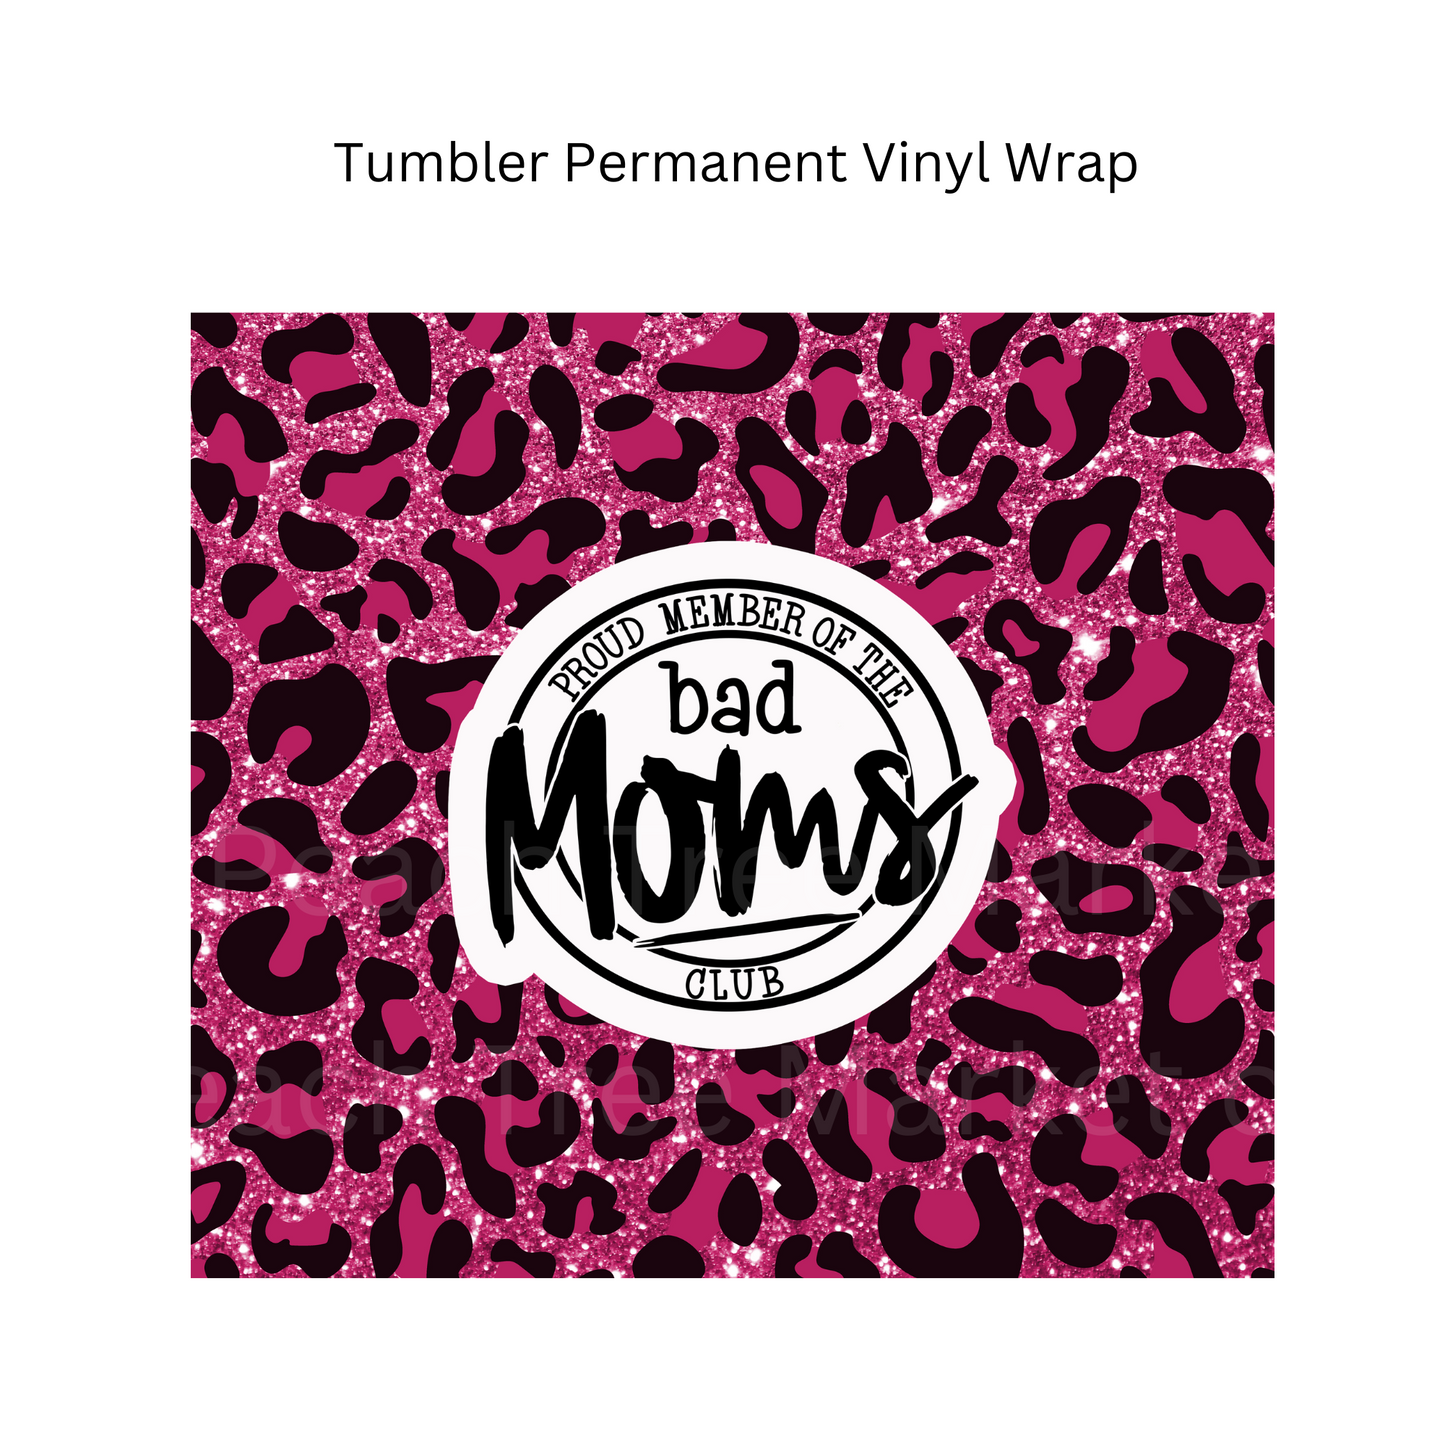 Bad Moms Club Pink Tumbler Permanent Vinyl Wrap